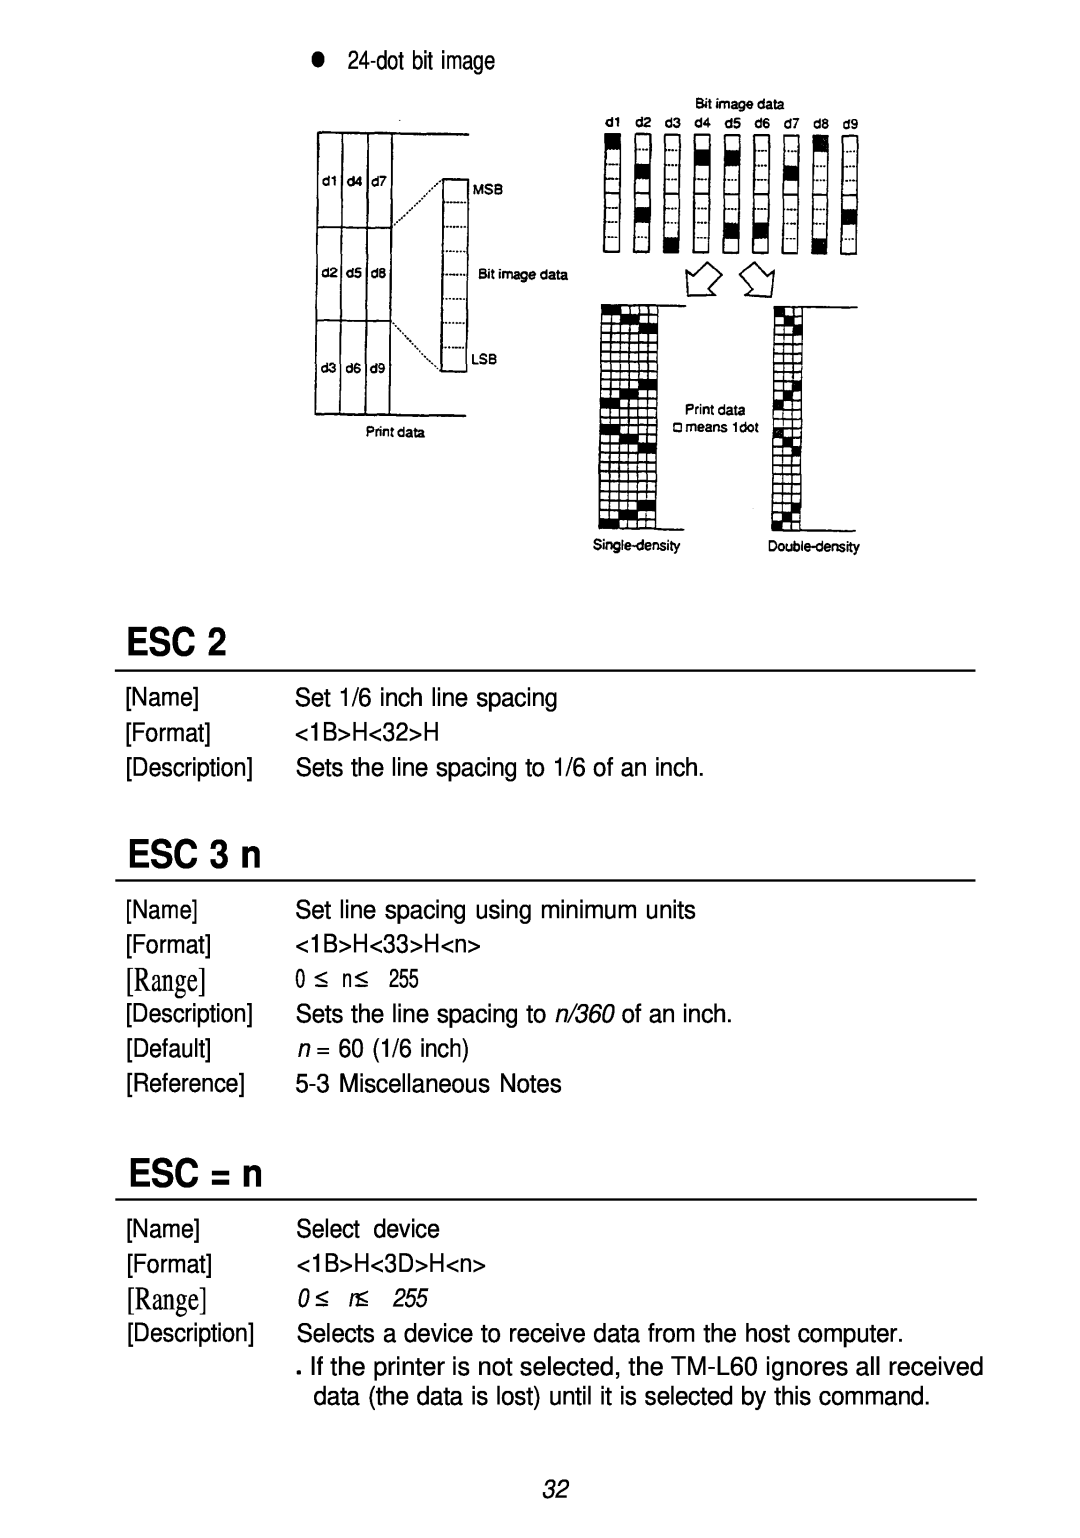 Seiko Group TM-L60 manual ESC 3 n, ESC = n, Range 